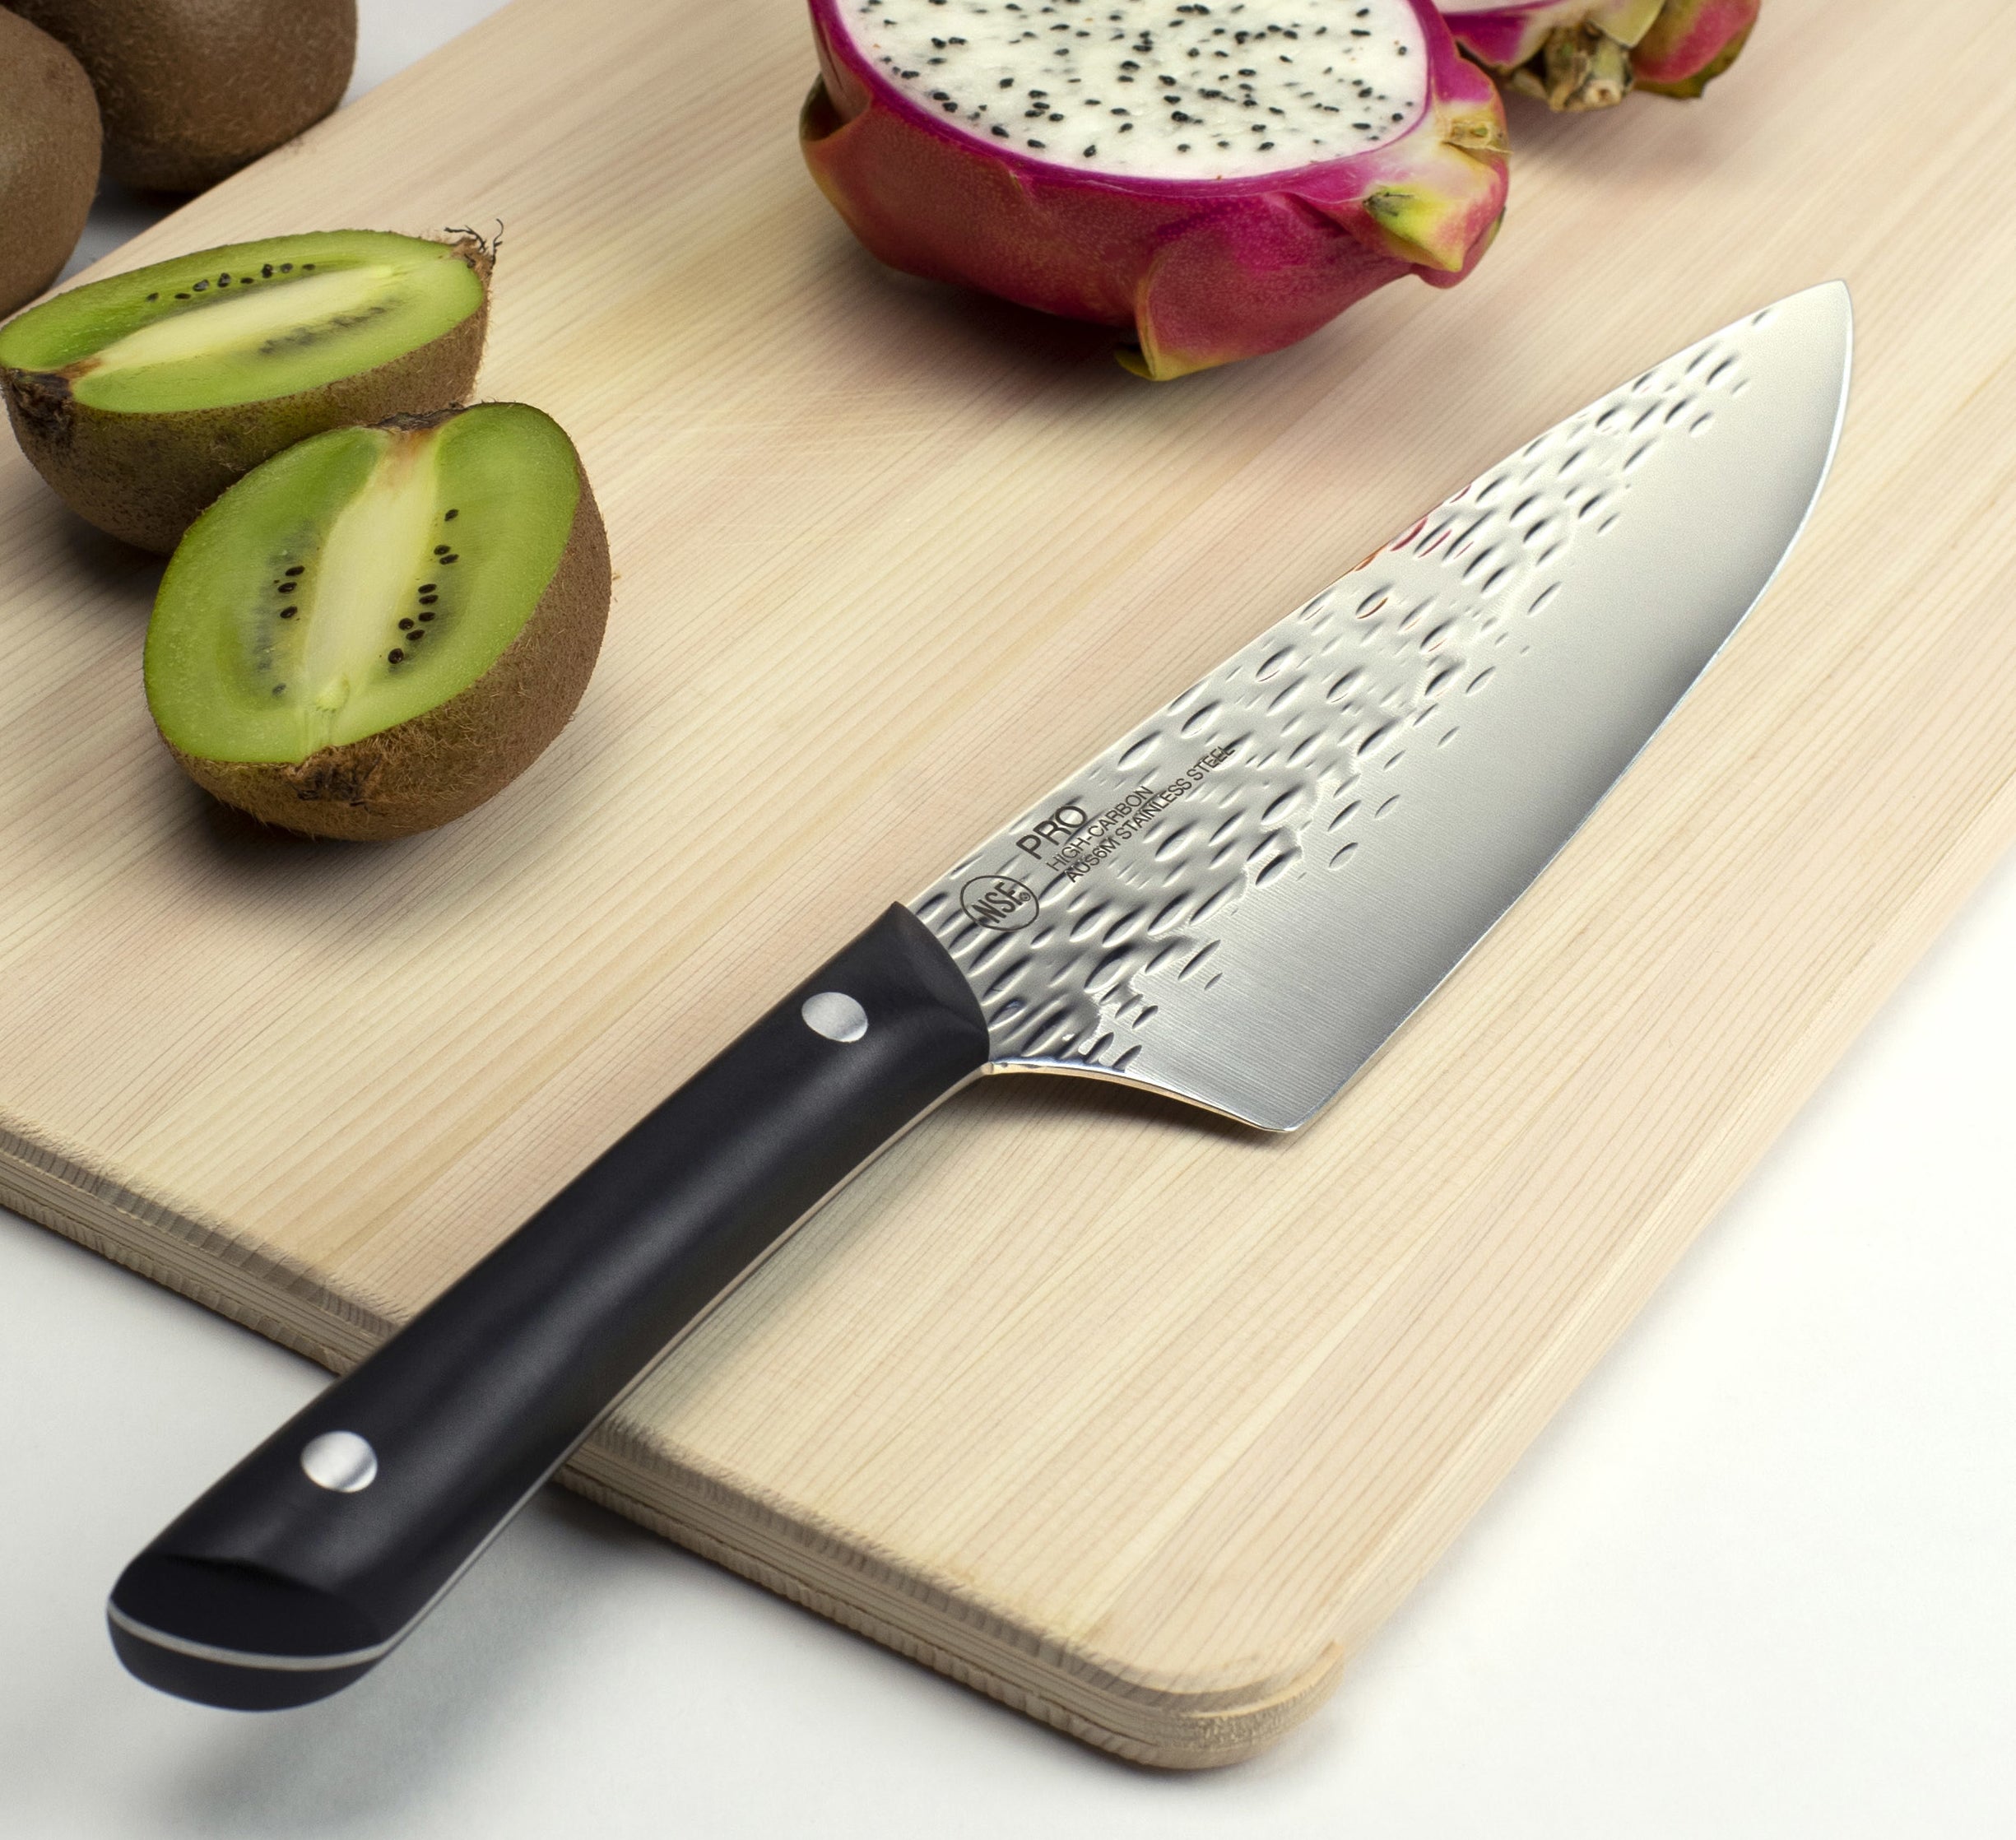 A Kai Pro knife on a cutting board.